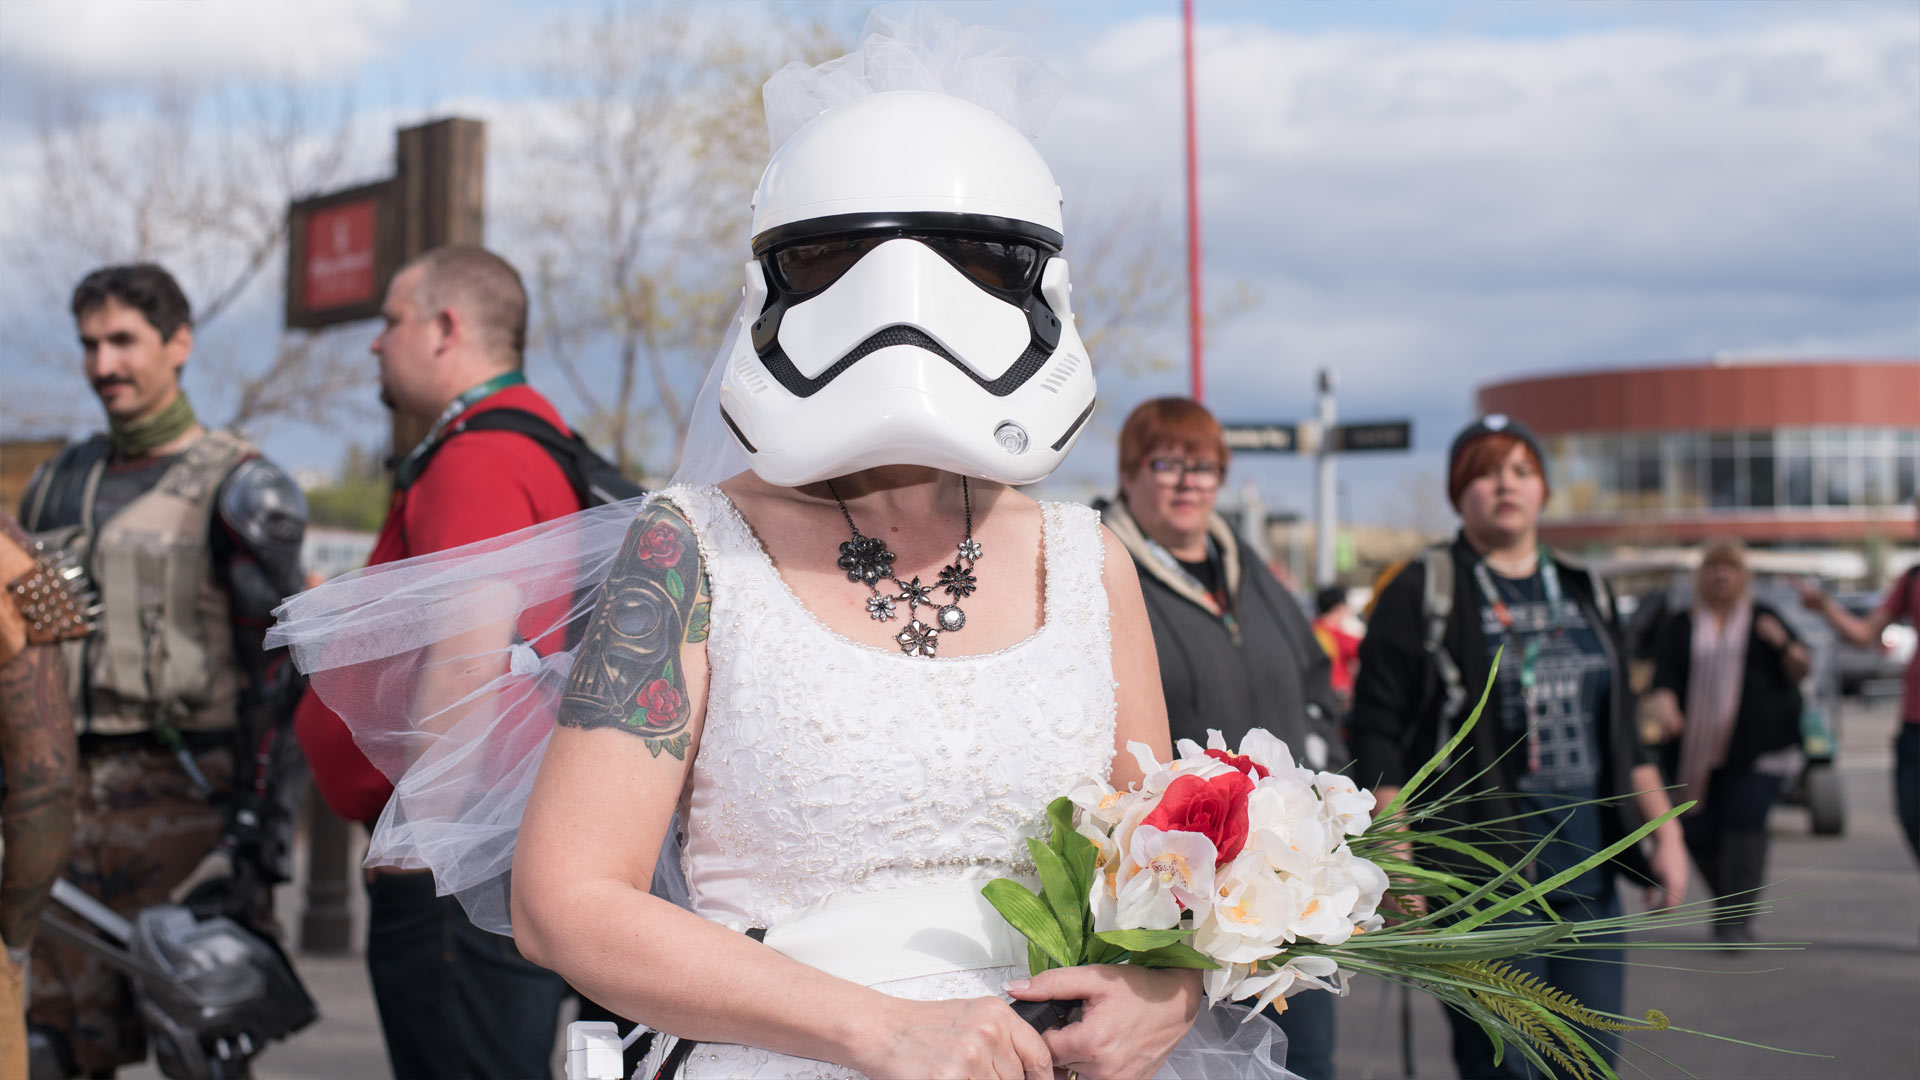 Calgary Expo 2016 Cosplay Day 2 Stormtrooper Bride